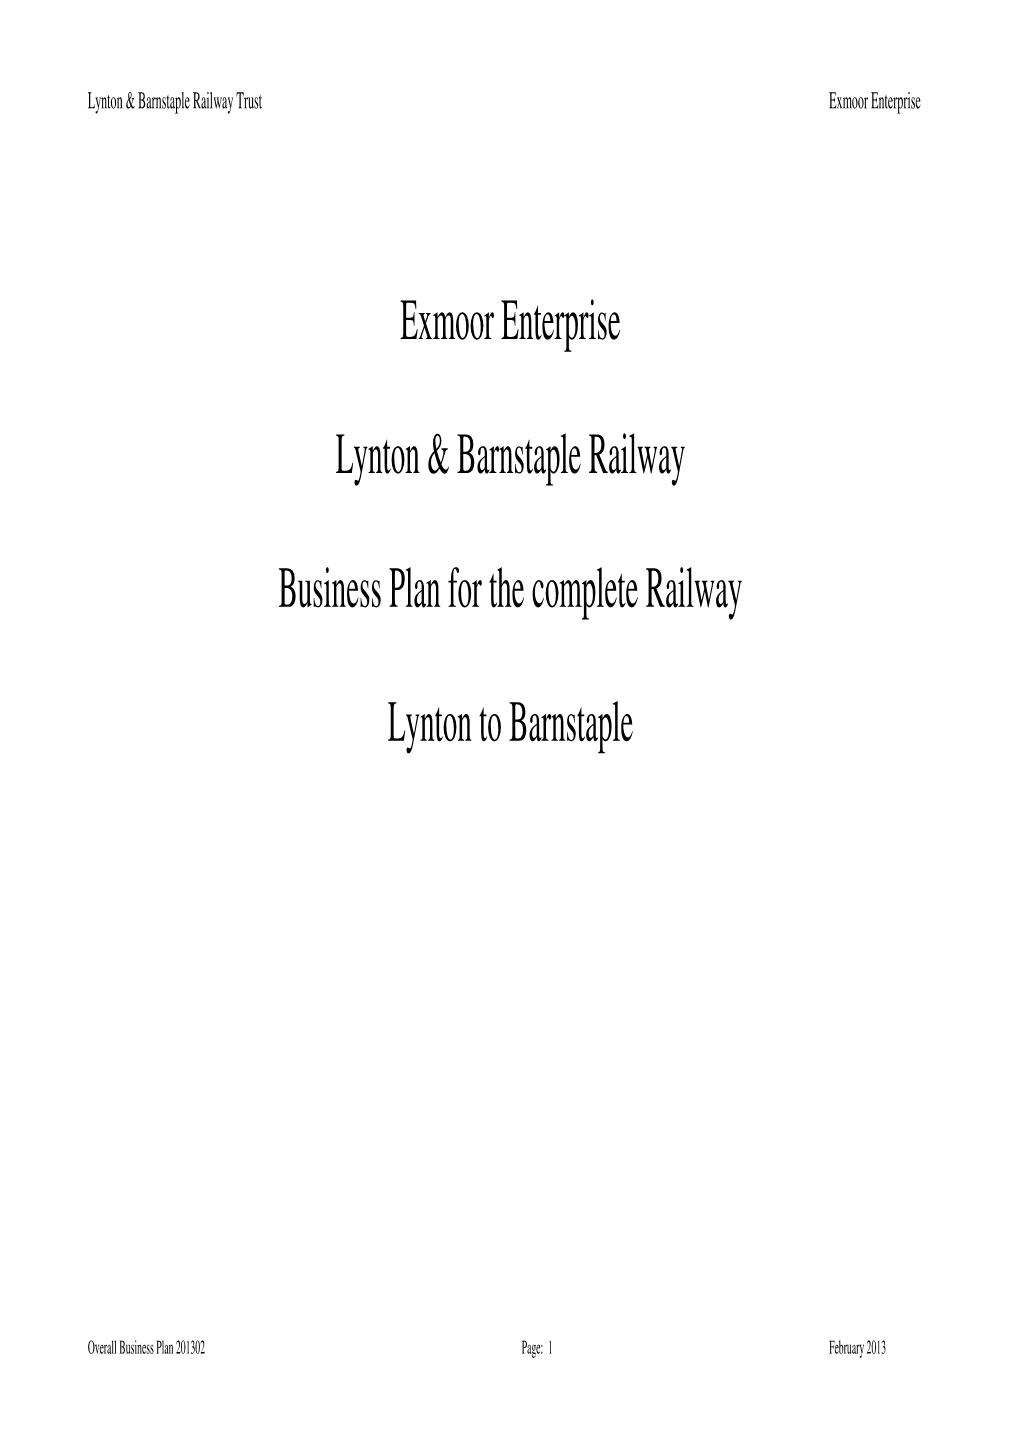 Exmoor Enterprise Lynton & Barnstaple Railway Business Plan